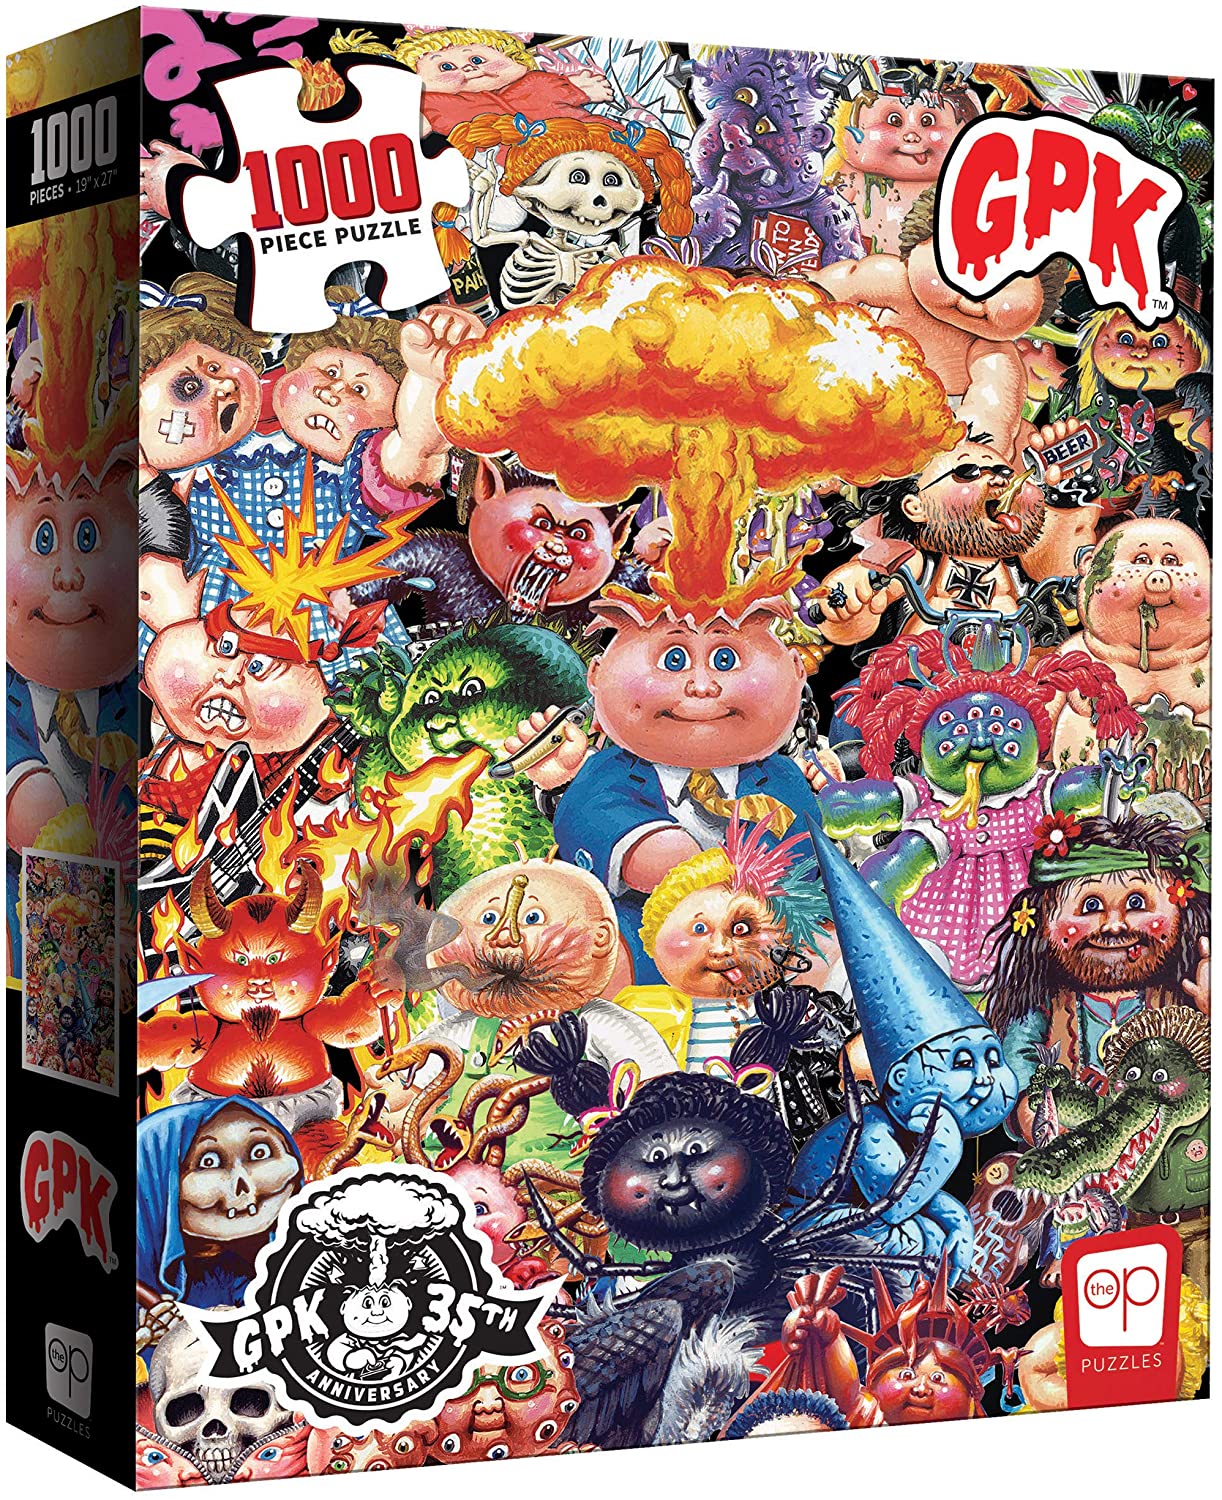 Garbage Pail Kids Yuck 1000 Piece Jigsaw Puzzle - image 2 of 4